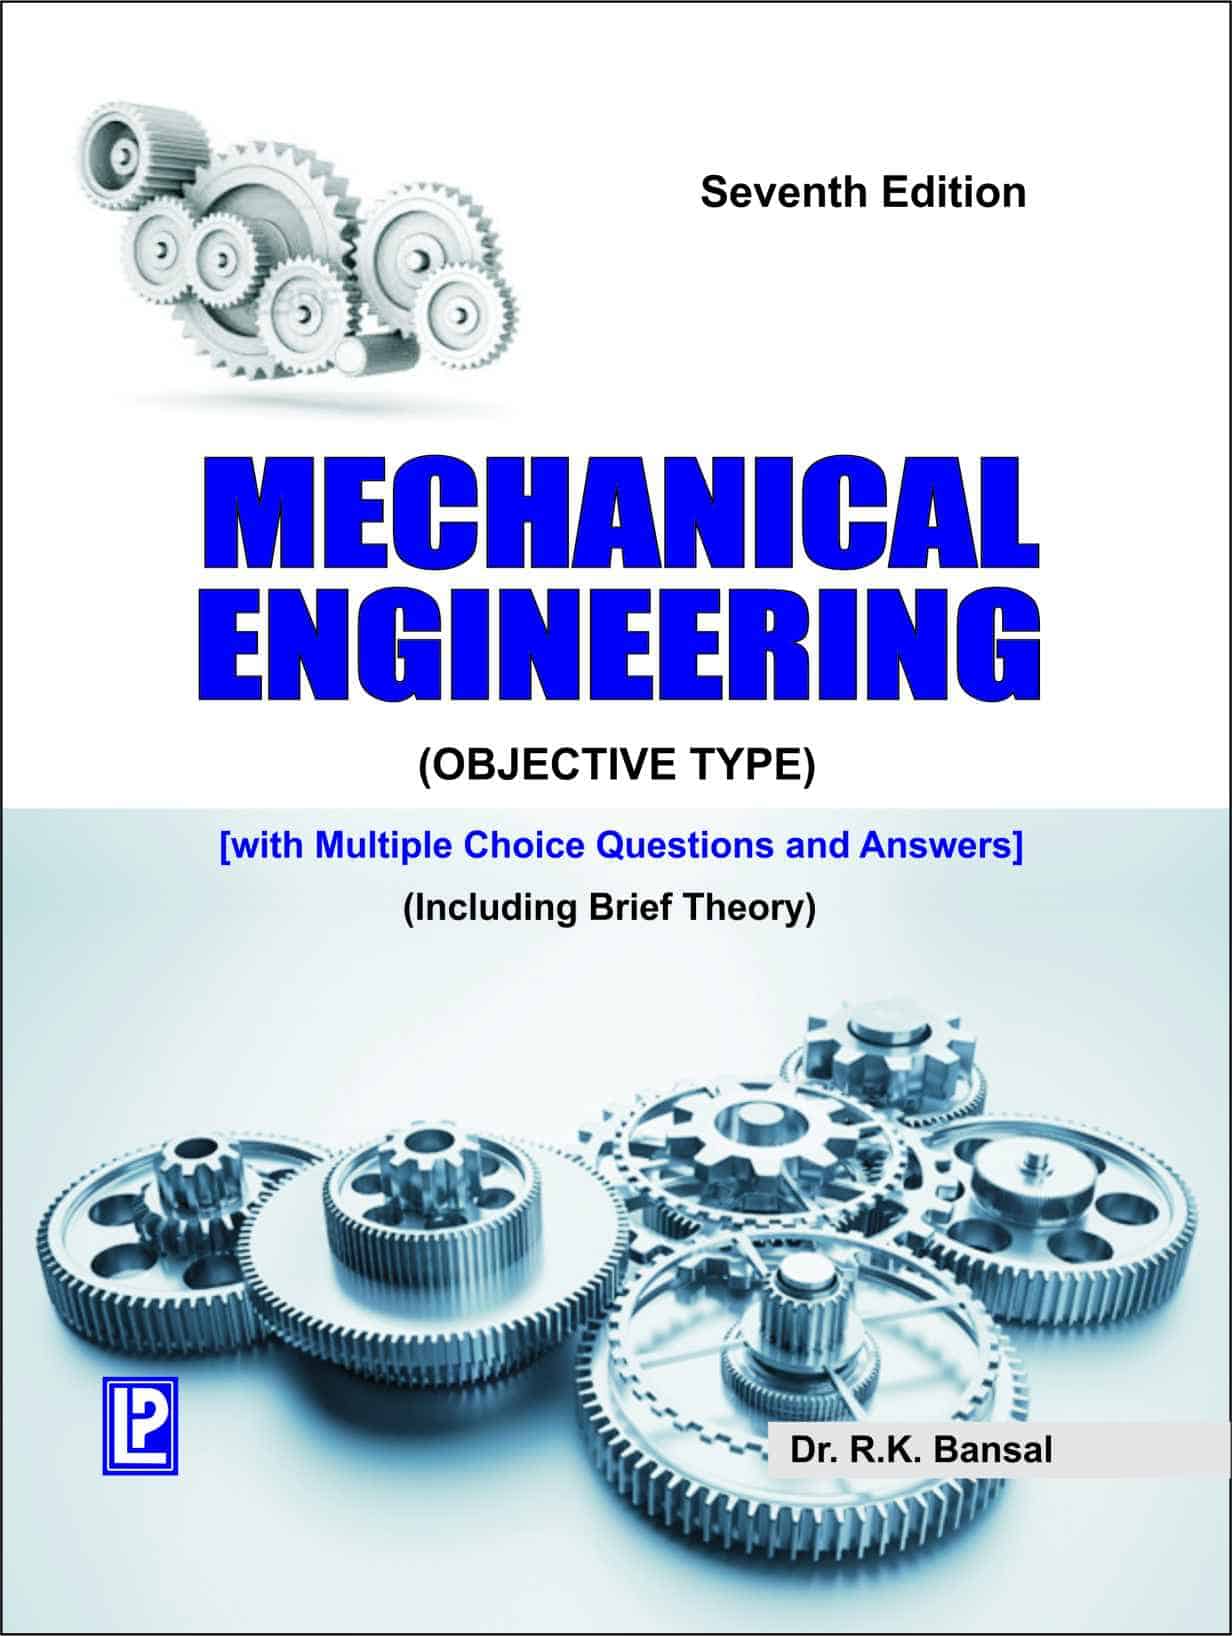 Mechanical Engineering (O.T.) - Dr. R.K. Bansal